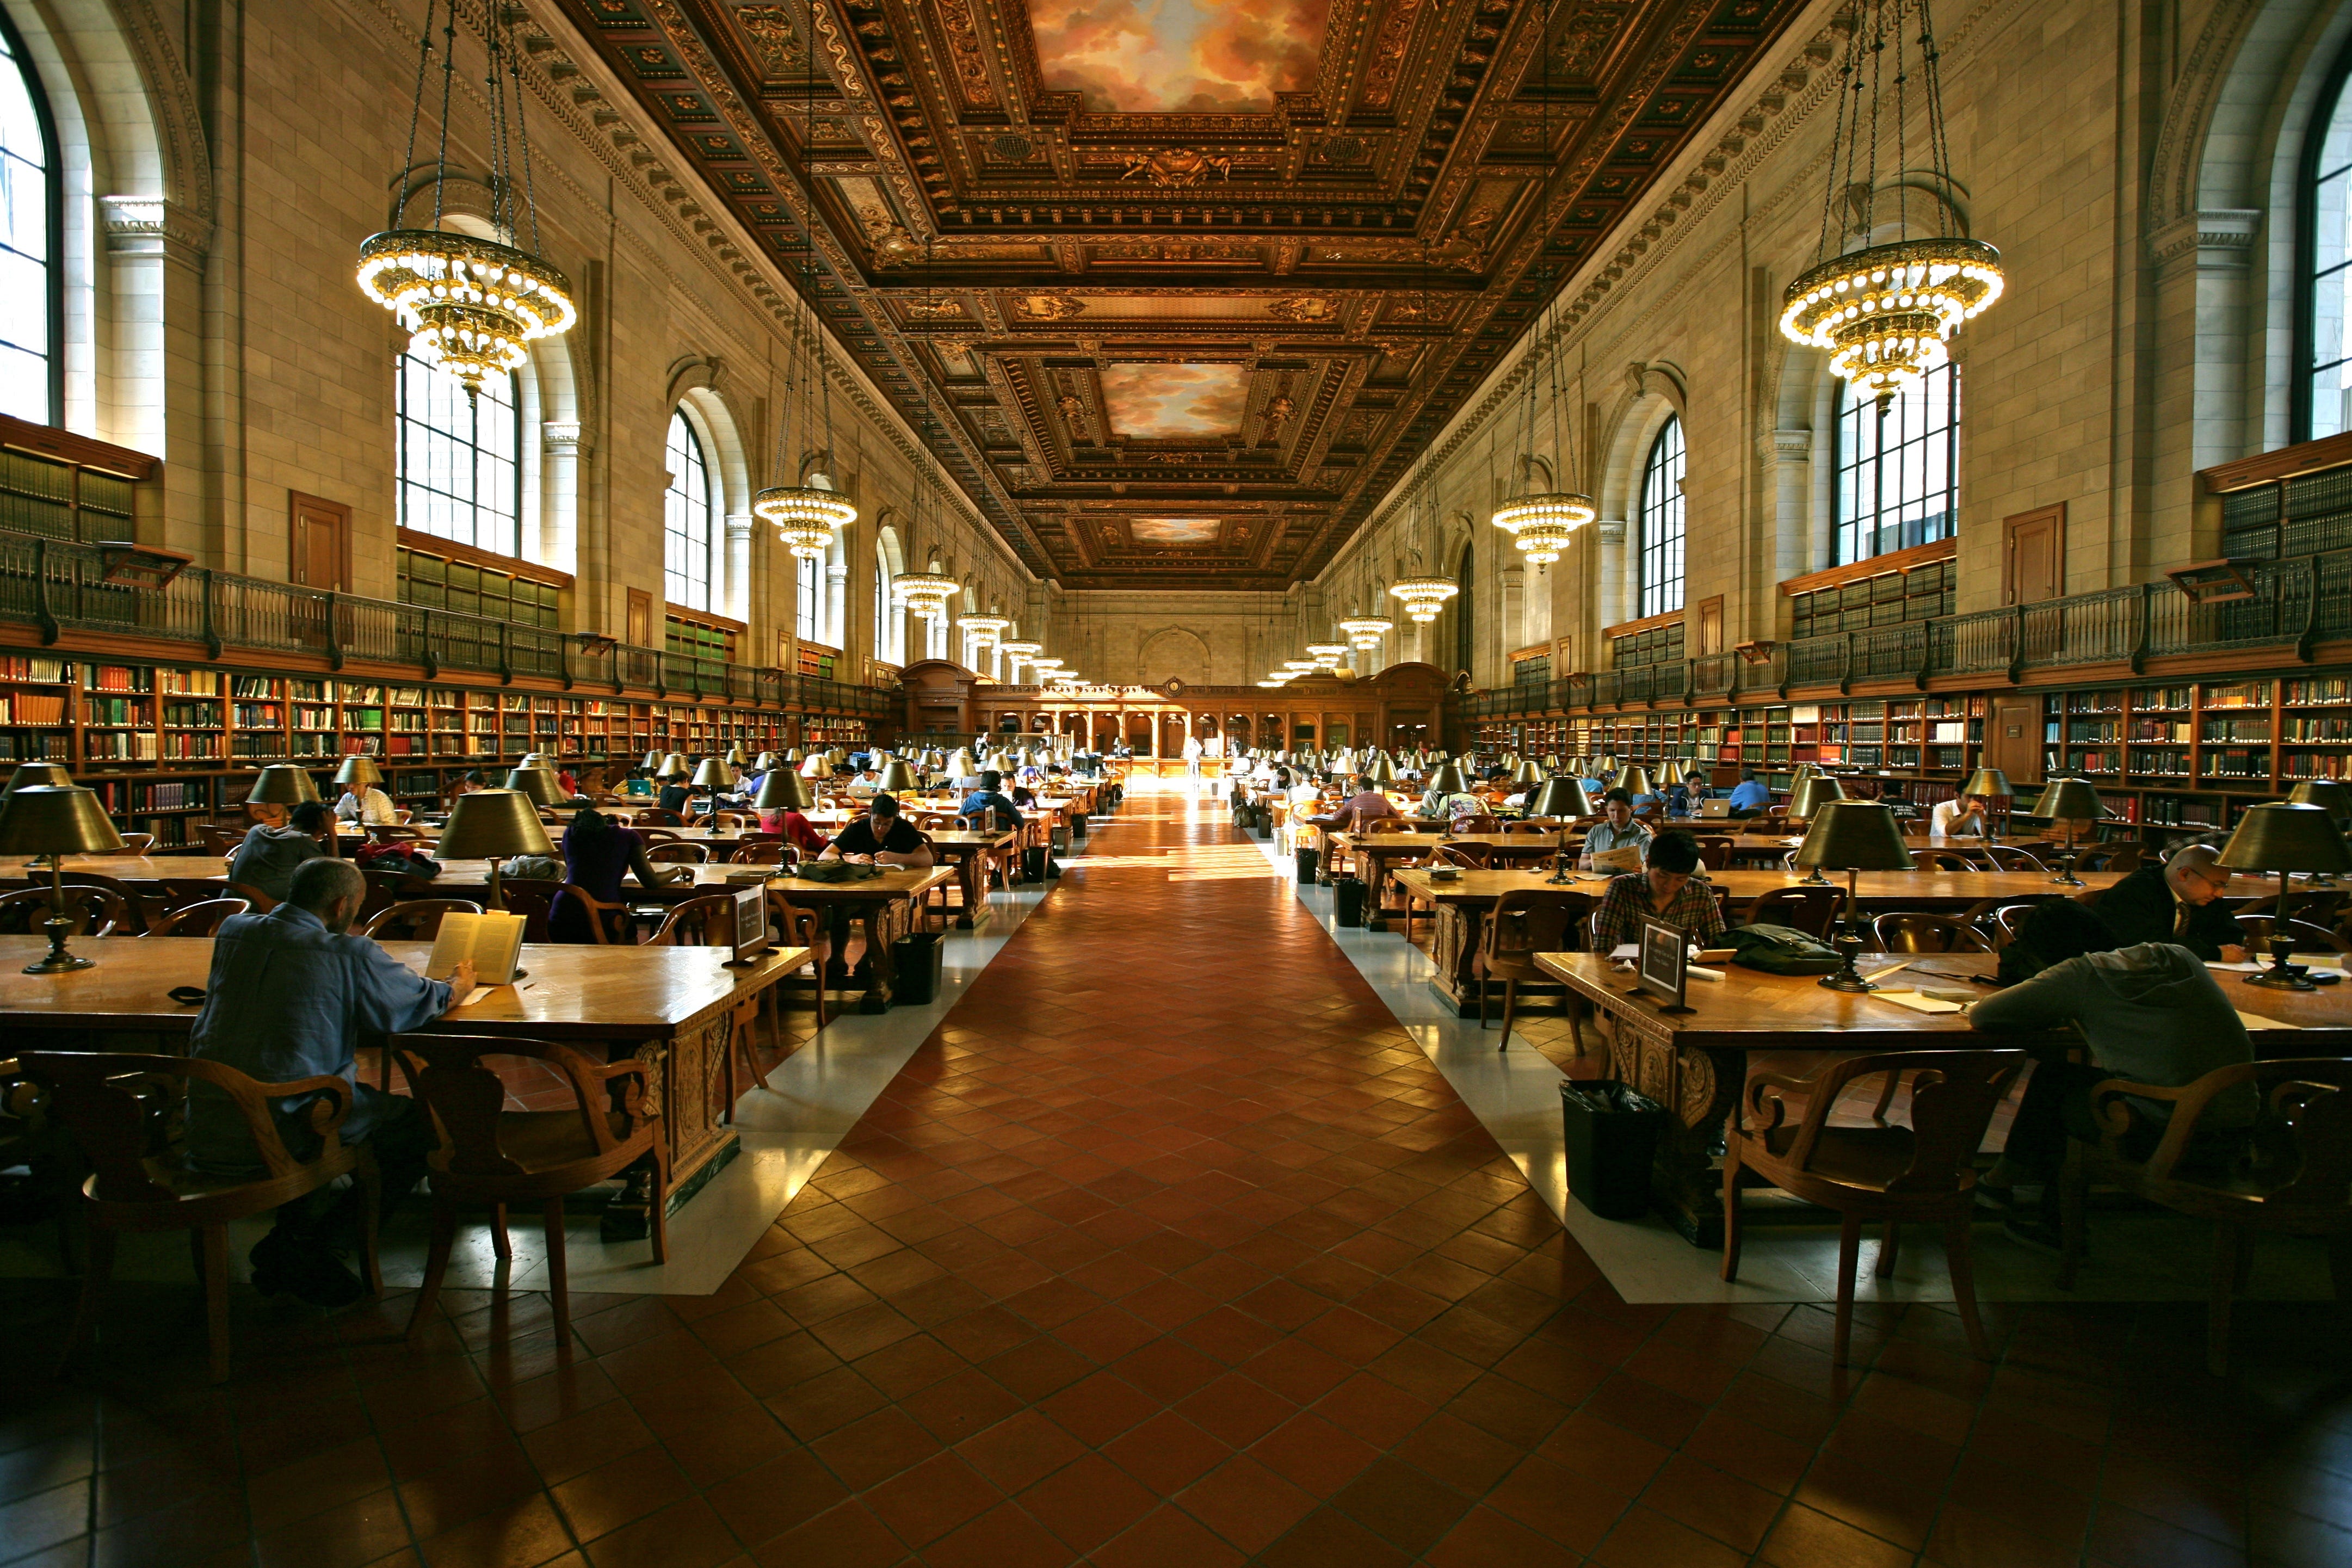 Alex Proimos — New York Public Library Grand Study Hall (CC BY 2.0)